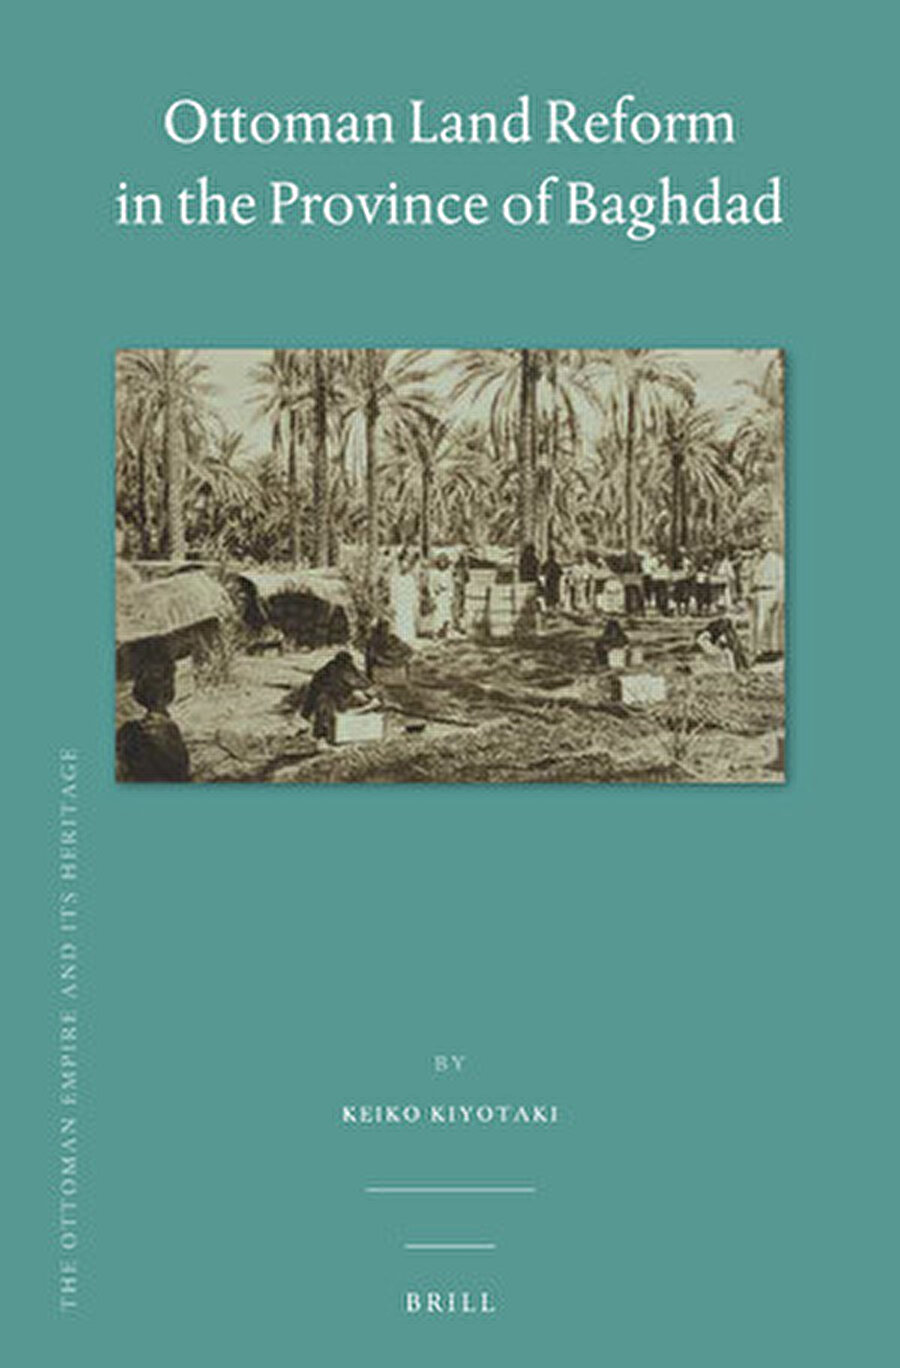  Ottoman Land Reform in the Province of Baghdad, Brill Publishing,Keiko Kiyotaki